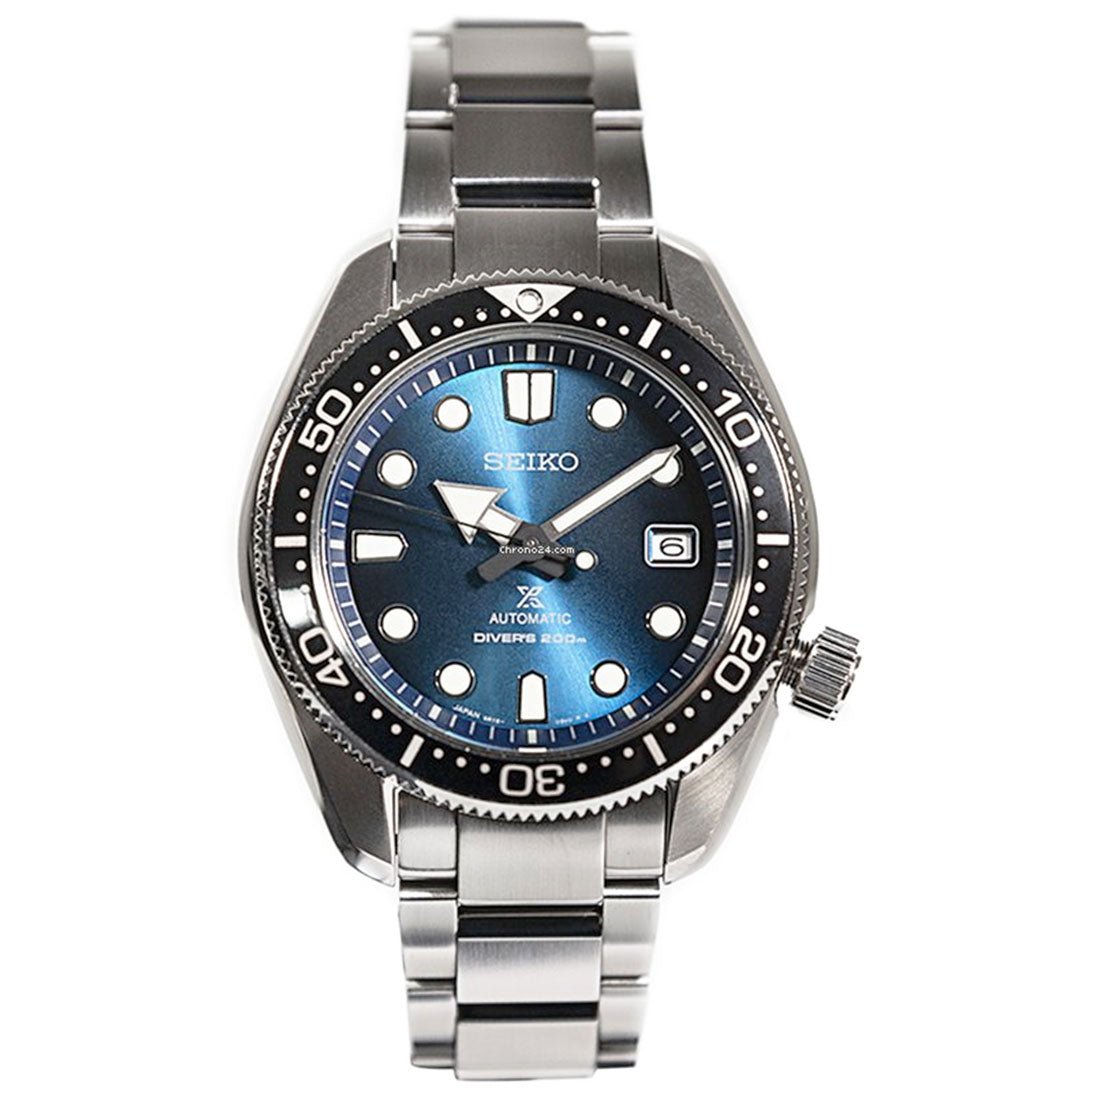 Seiko Prospex Automatic Divers JDM Watch SBDC065 (SPB083) -Seiko